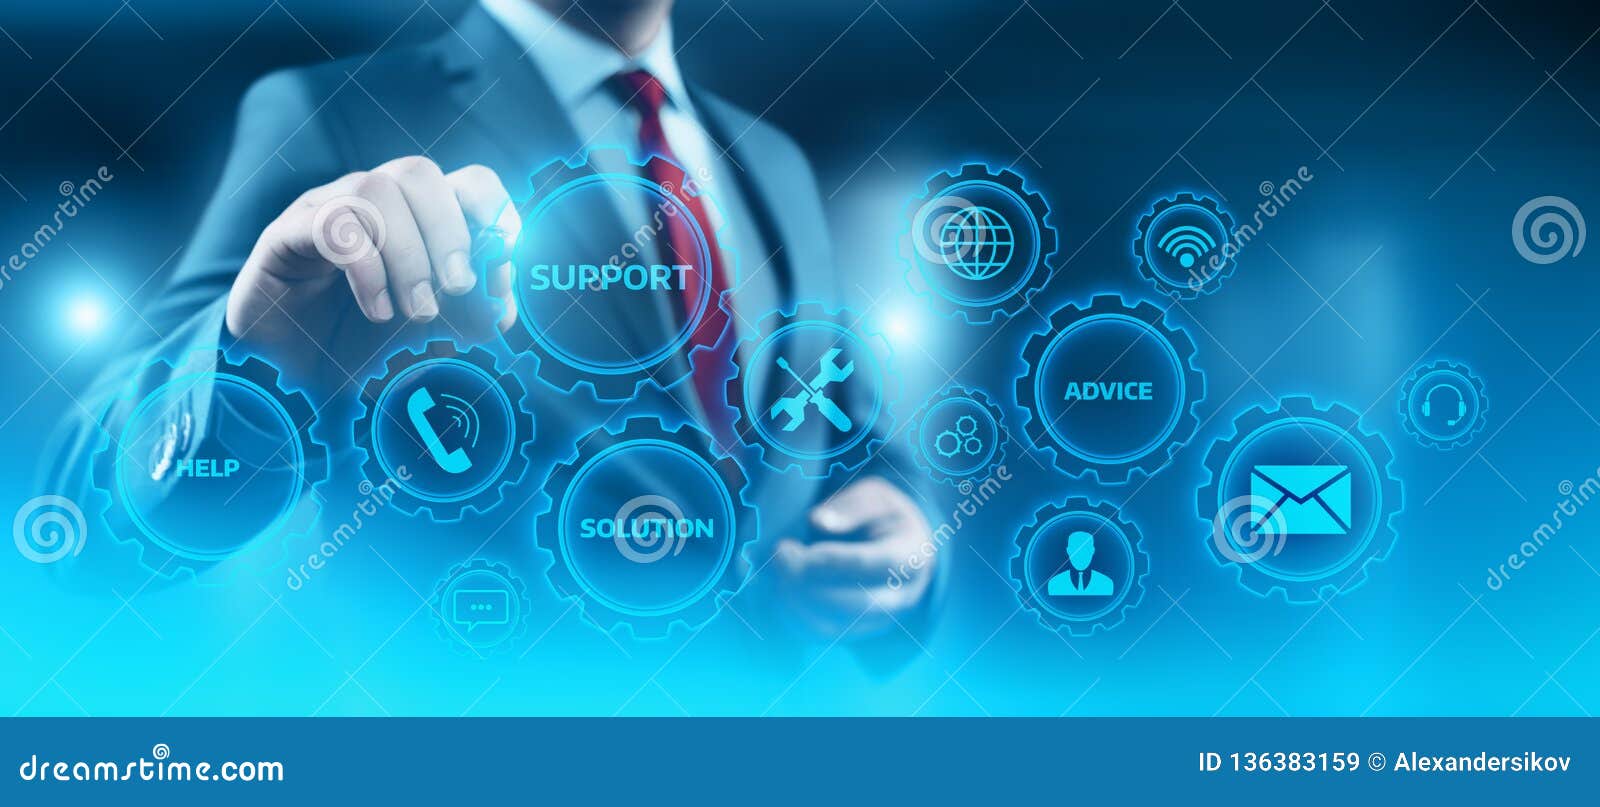 technical support center customer service internet business technology concept